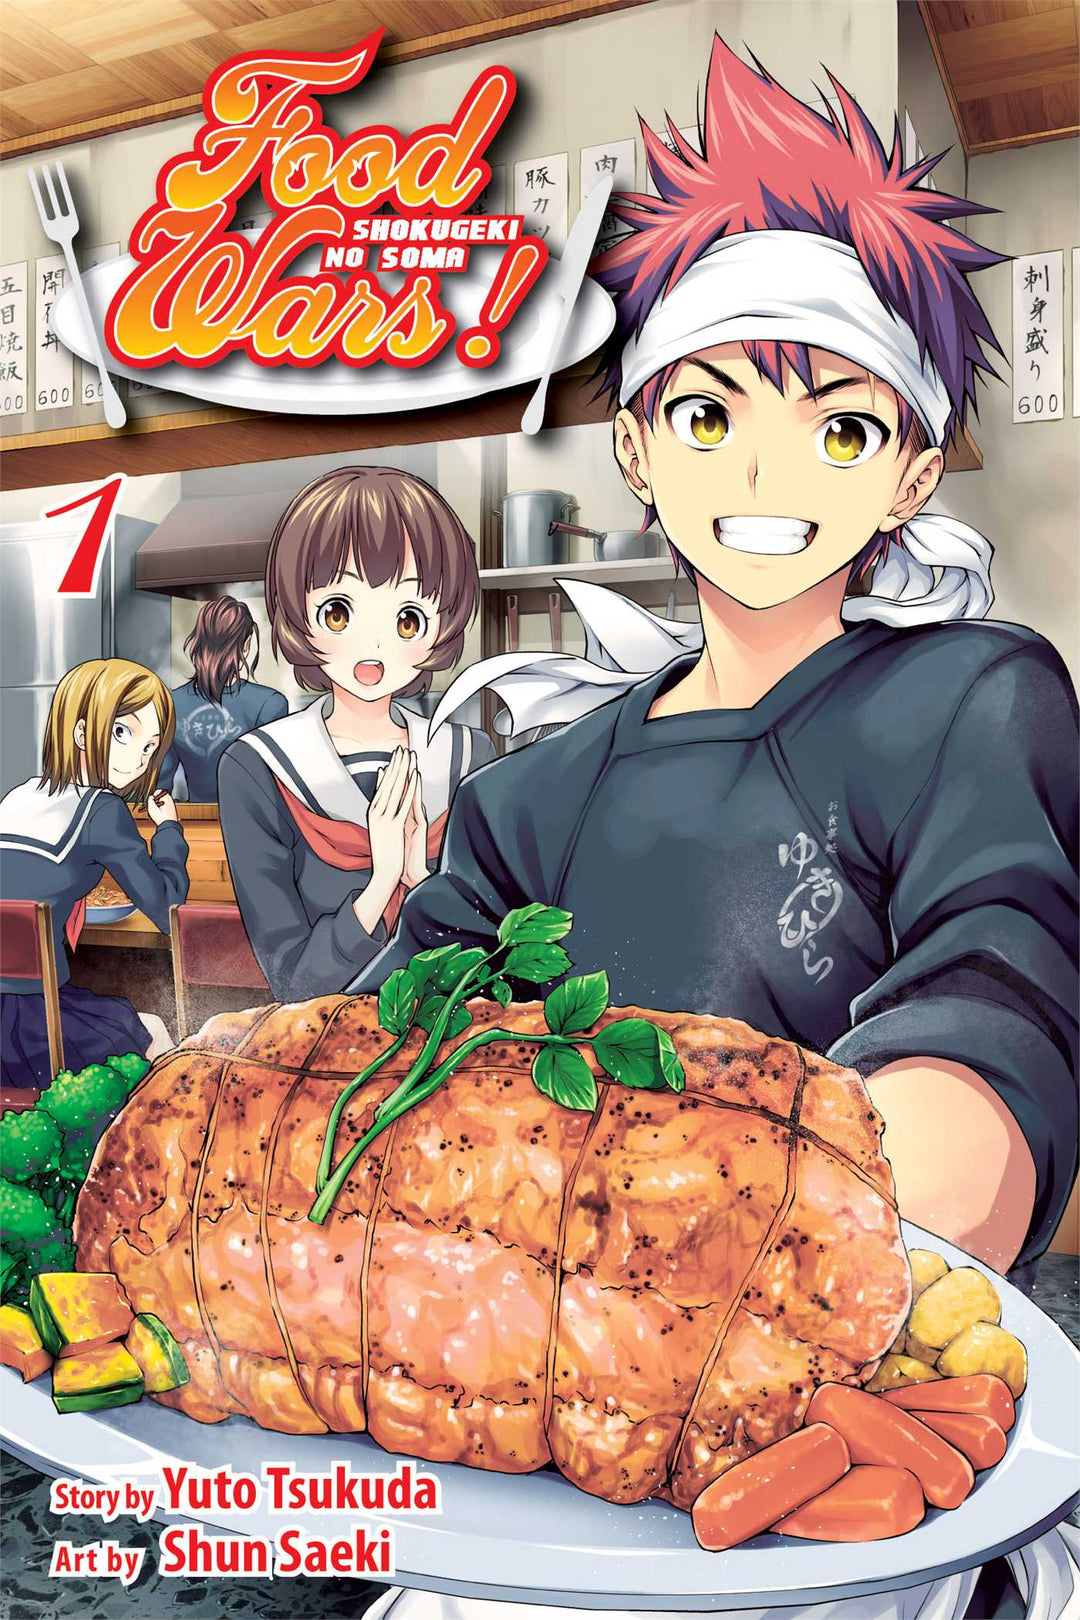 Food Wars!: Shokugeki no Soma, Vol. 01 - Manga Mate